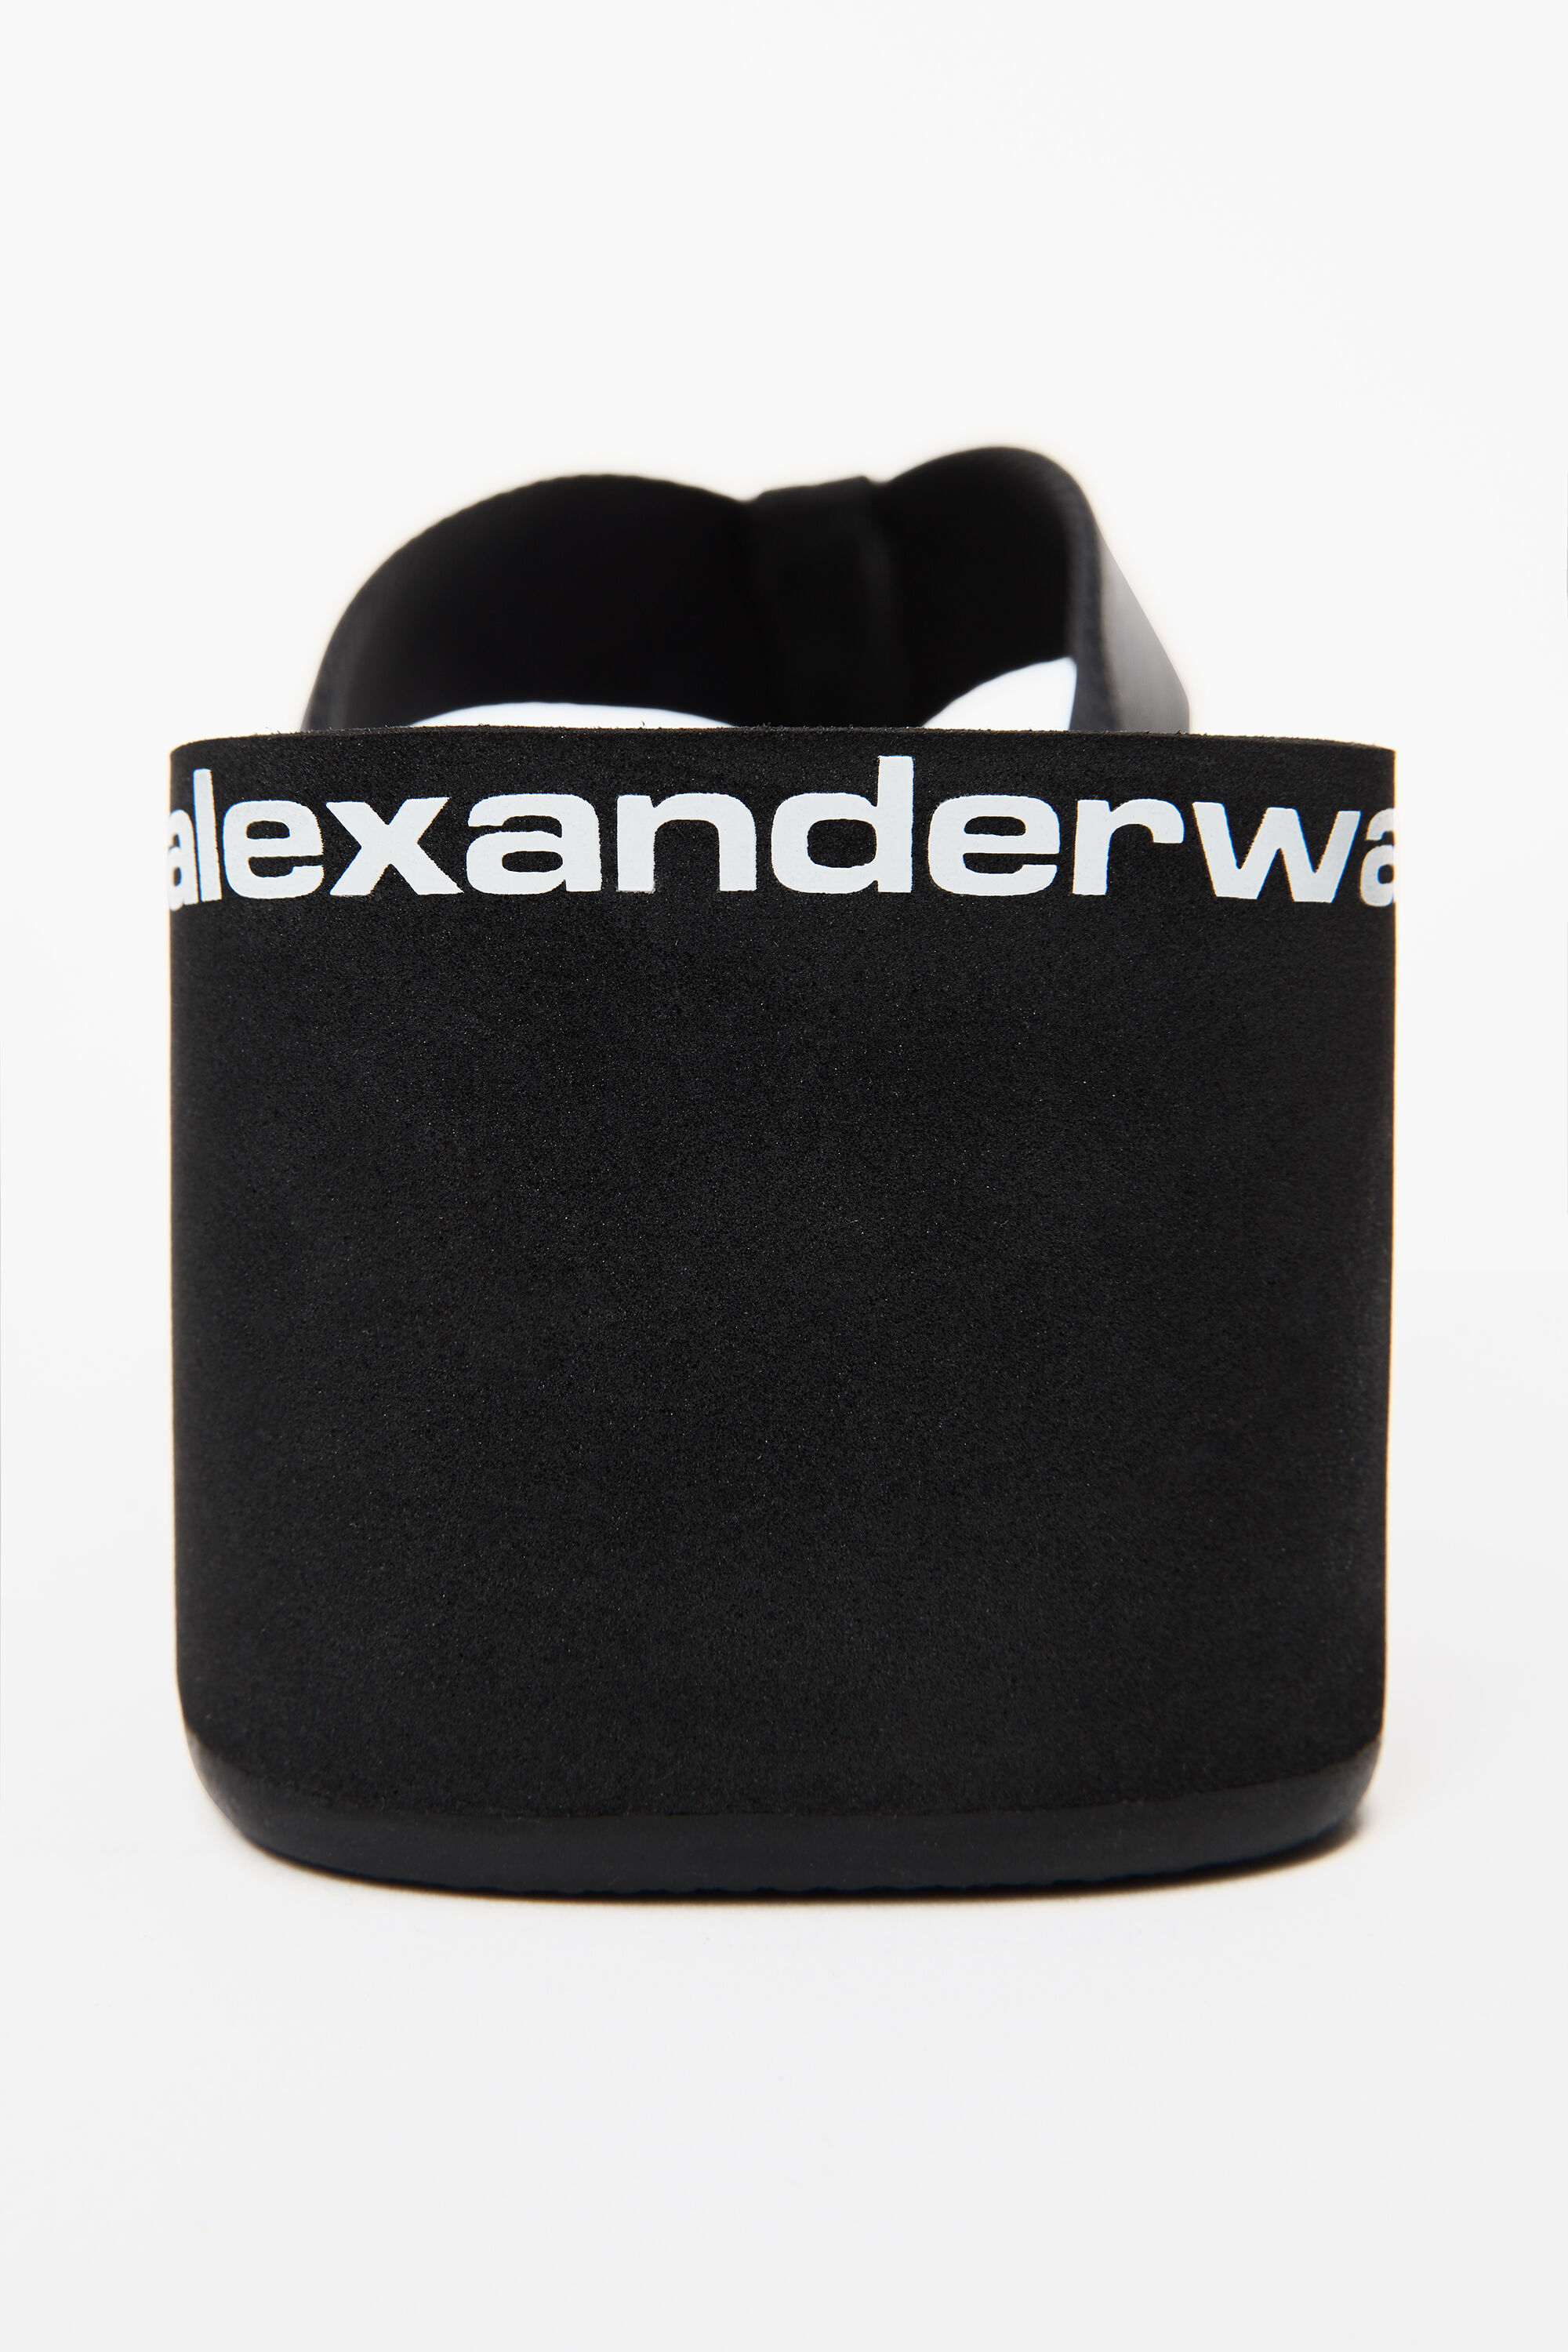 alexanderwang AW NYLON WEDGE FLIP FLOPS BLACK - alexanderwang® CN